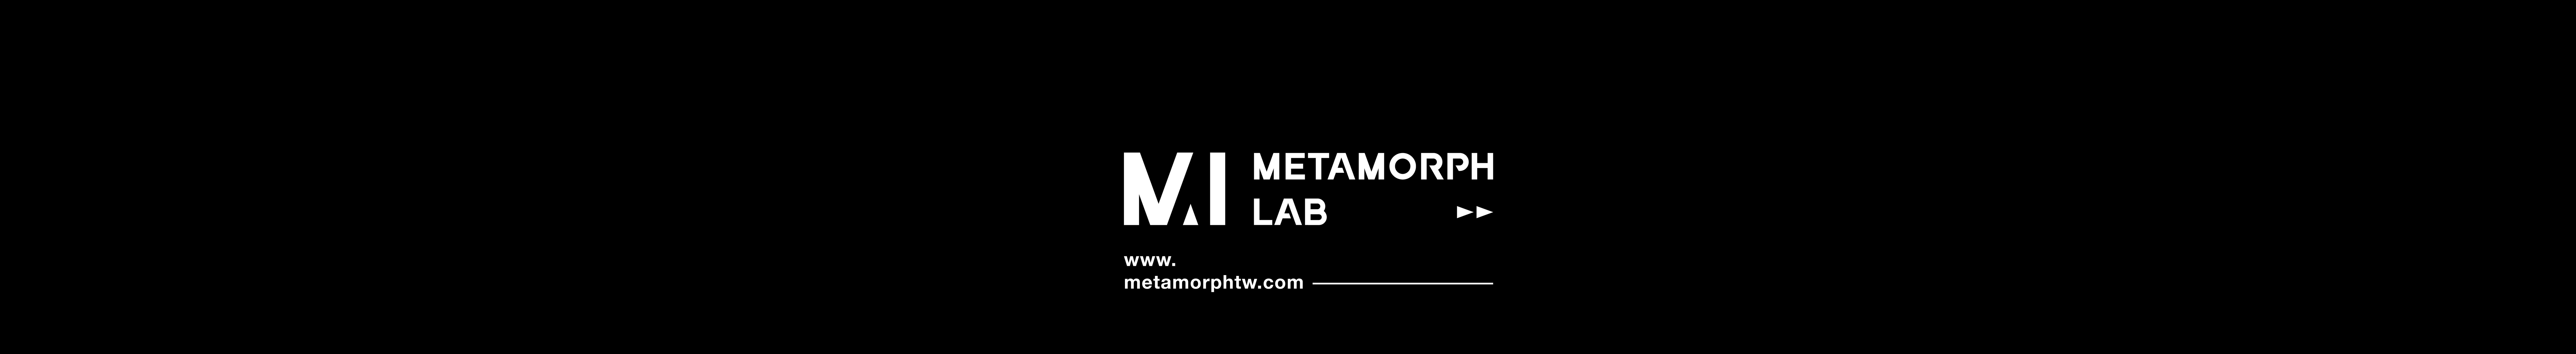 METAMORPH LAB's profile banner